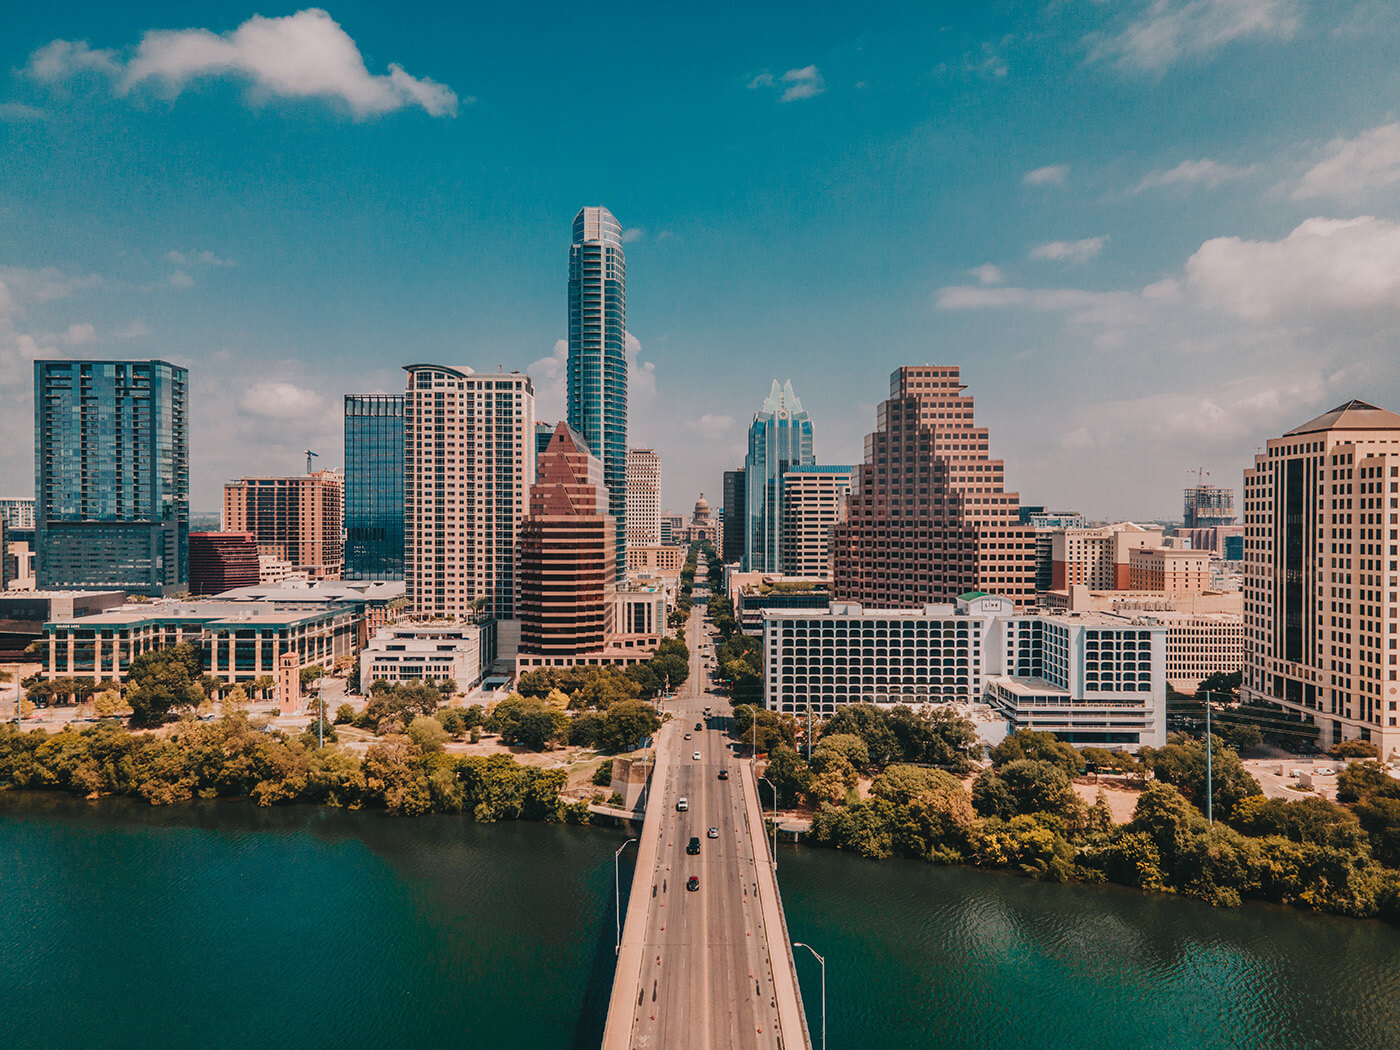 The cityscape of Austin, Texas